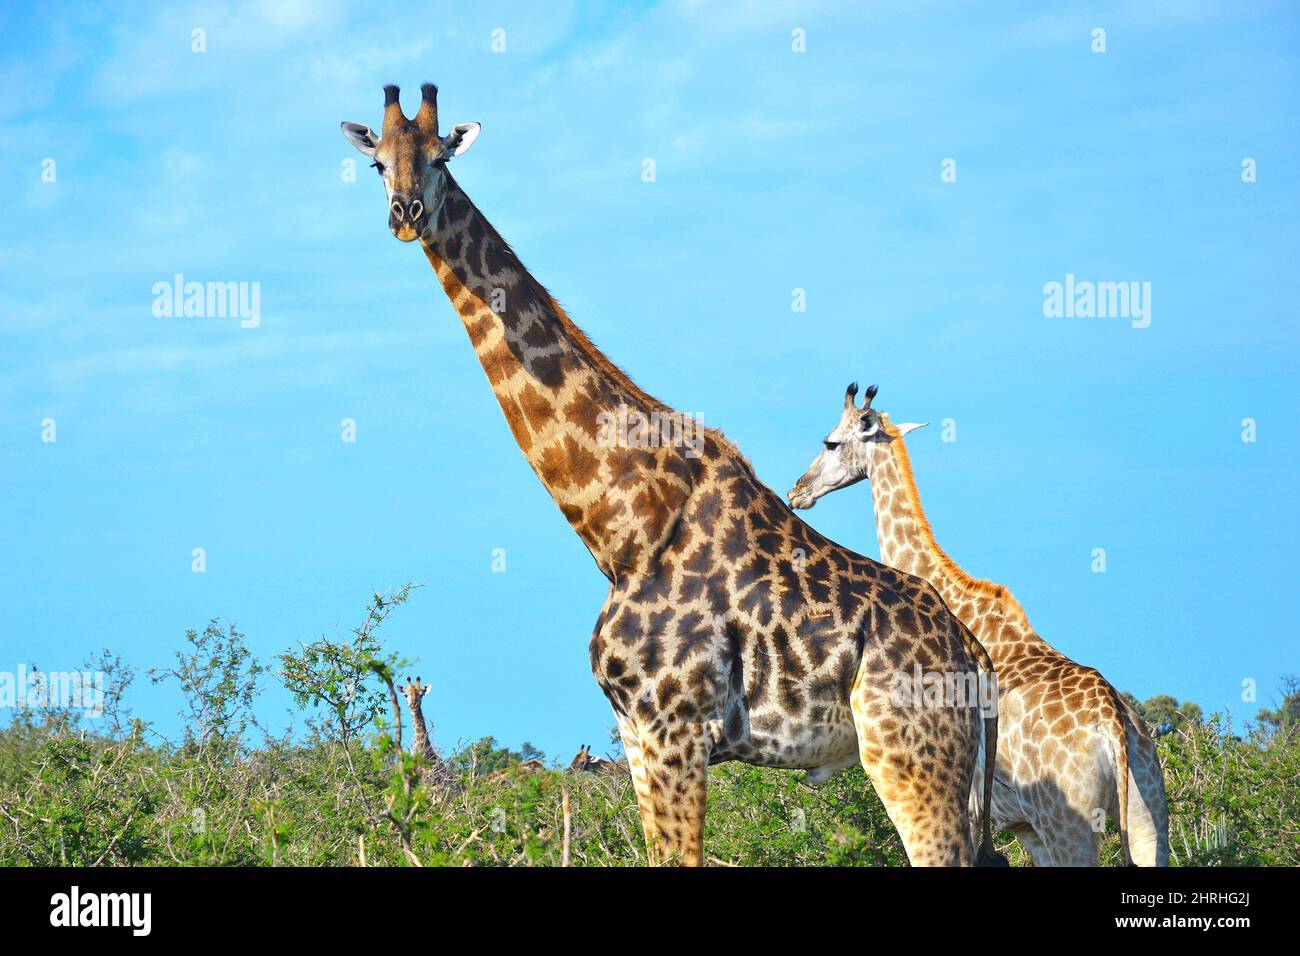 Adult giraffe with cub in Moremi Game Reserve, Okavango Delta, Botswana, Africa. Stock Photo